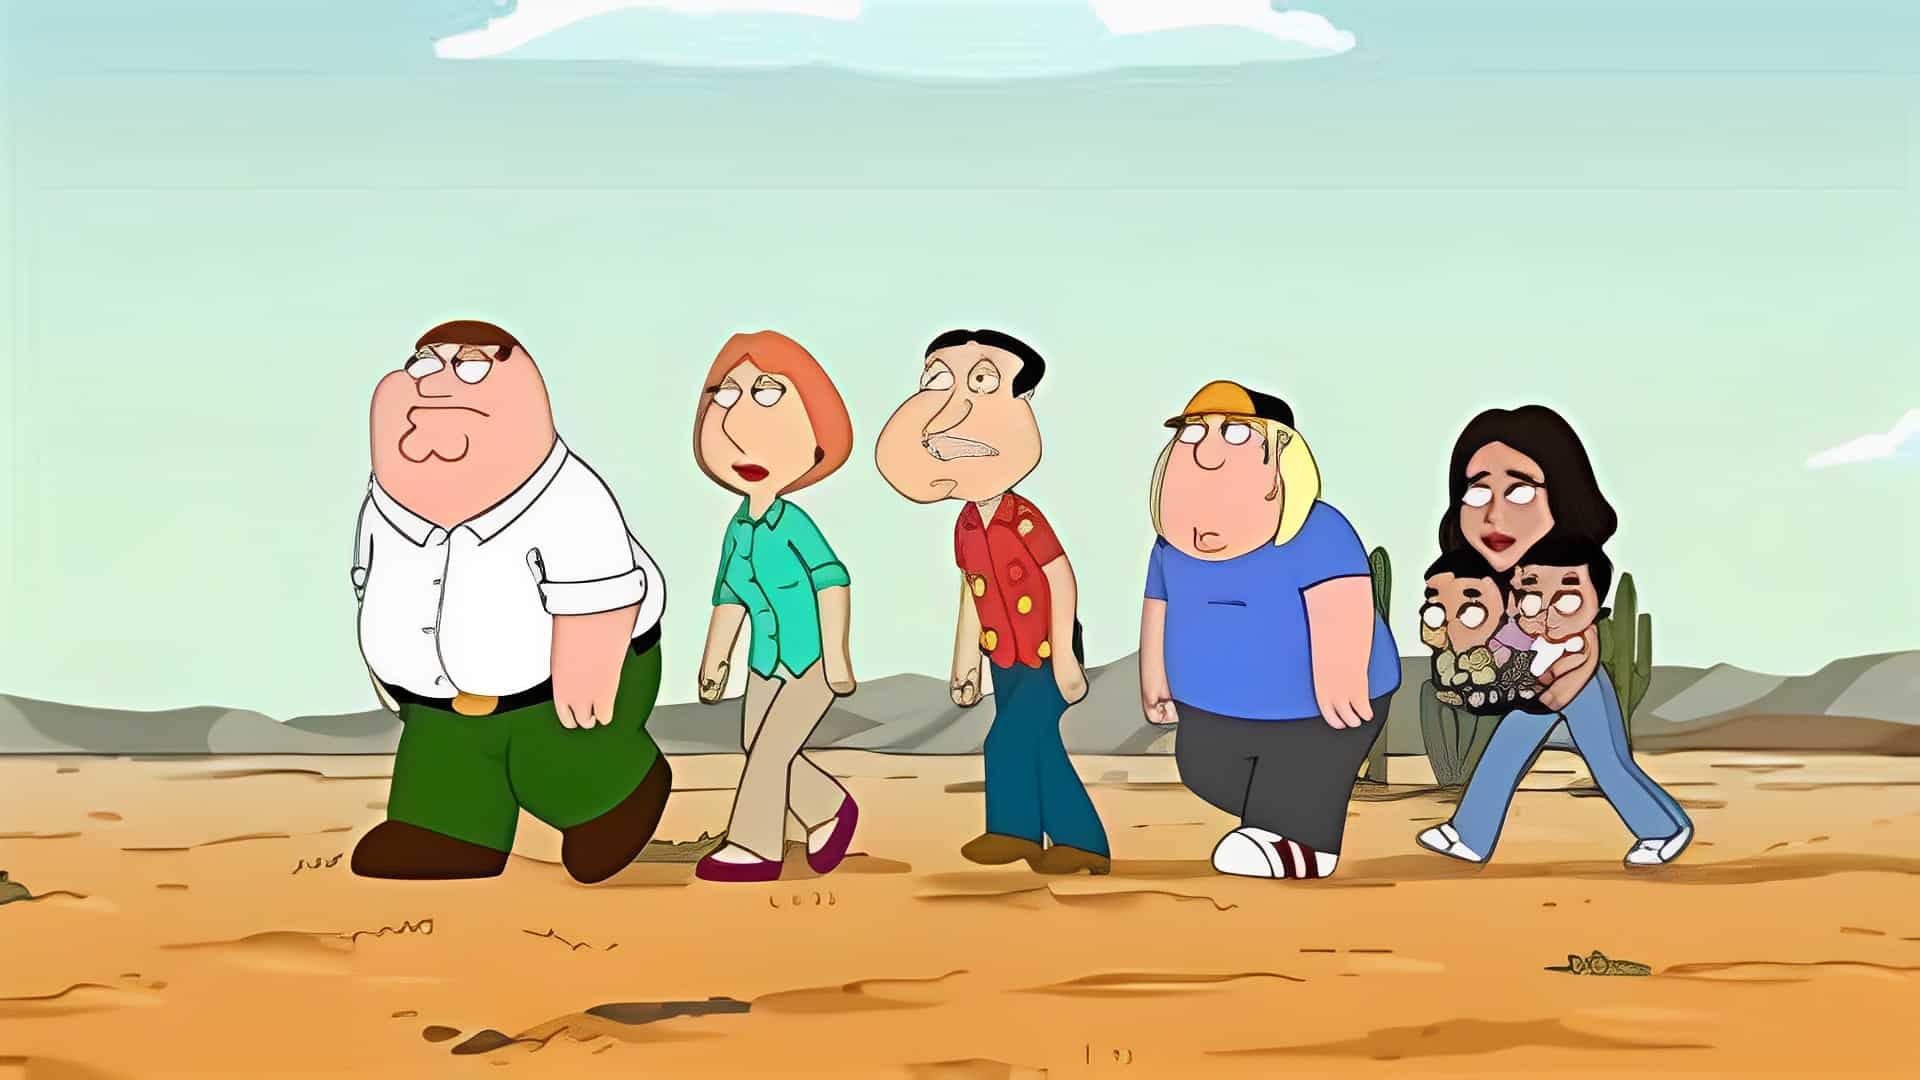 Family Guy Season 21 Episode 12 Release Date, Spoilers & Streaming